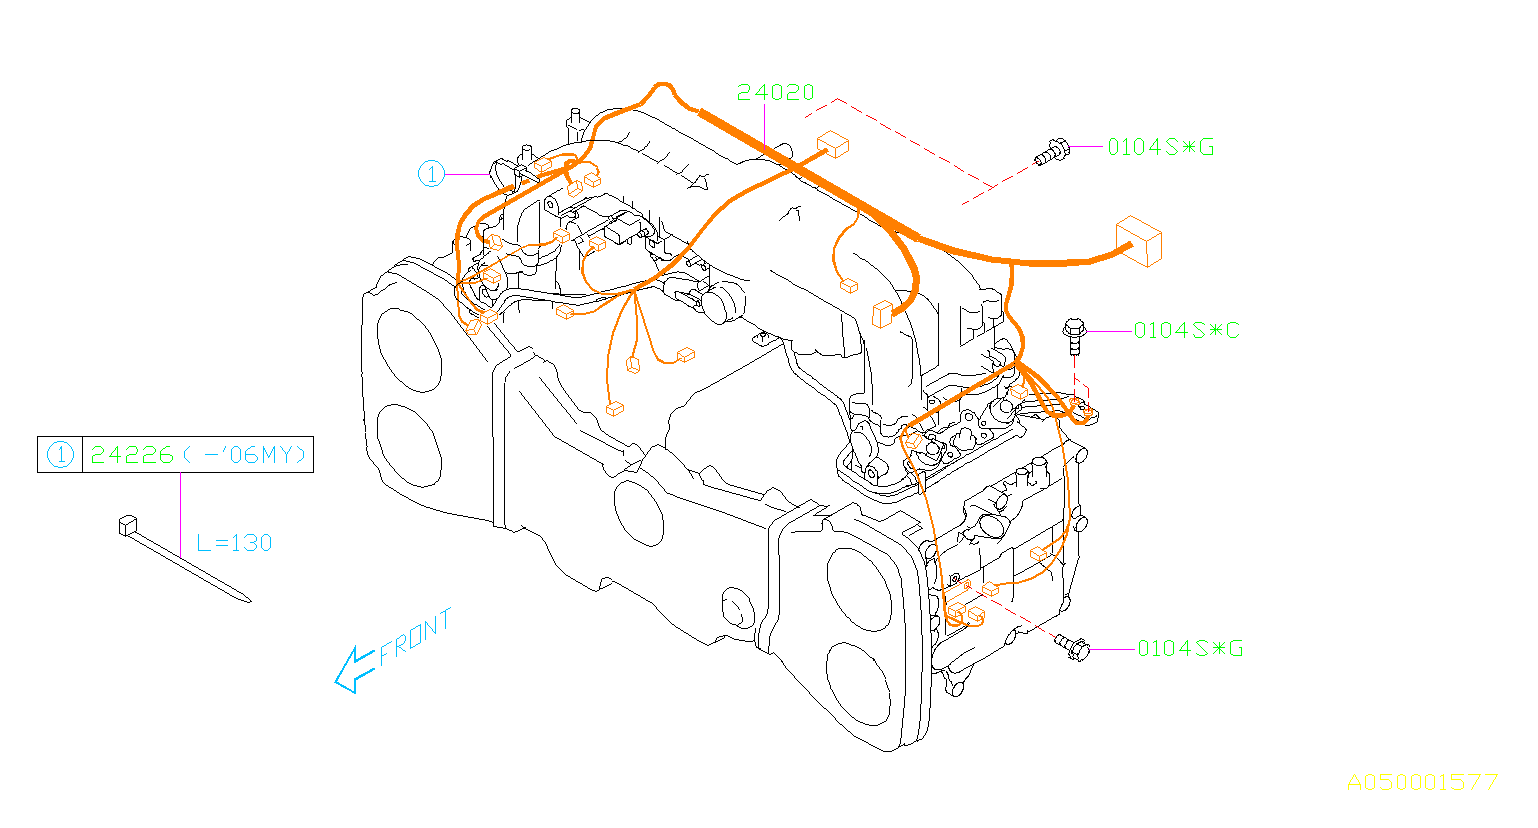 Subaru Outback Engine Wiring Harness. Wiring harness used